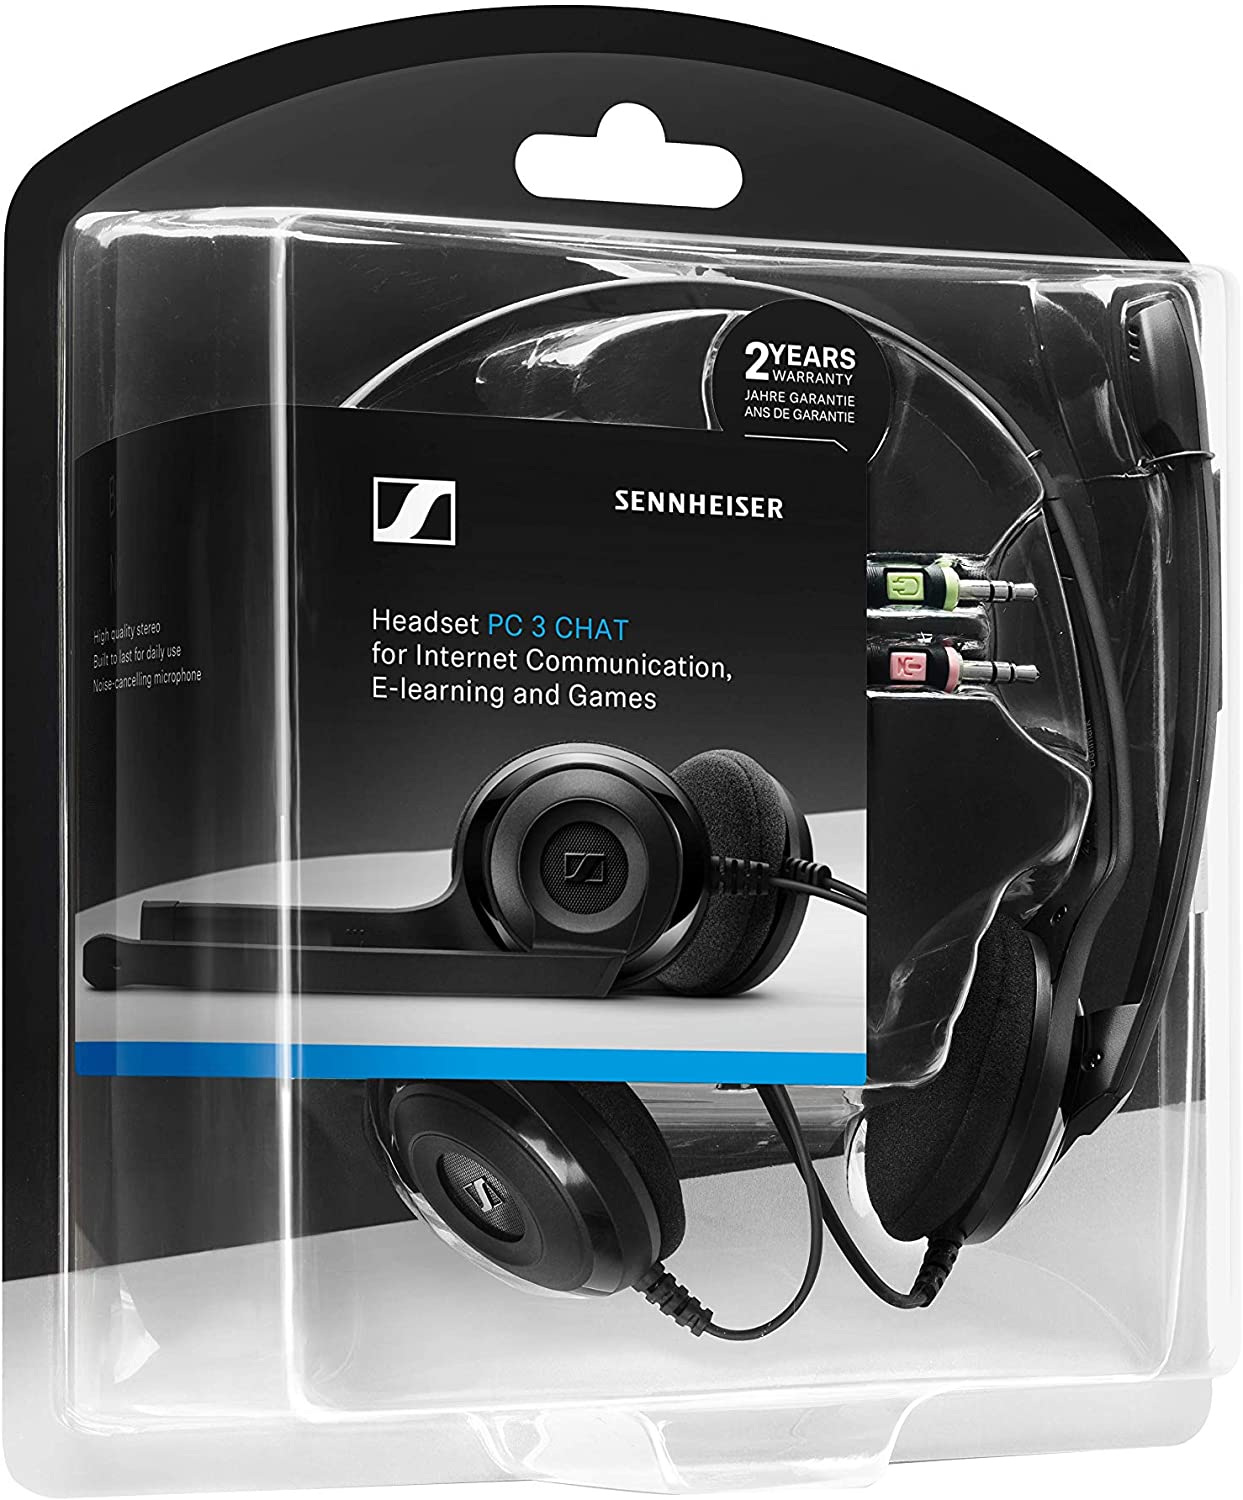 Sennheiser PC 3 Chat Consumer Audio 504195 Headset - Wired